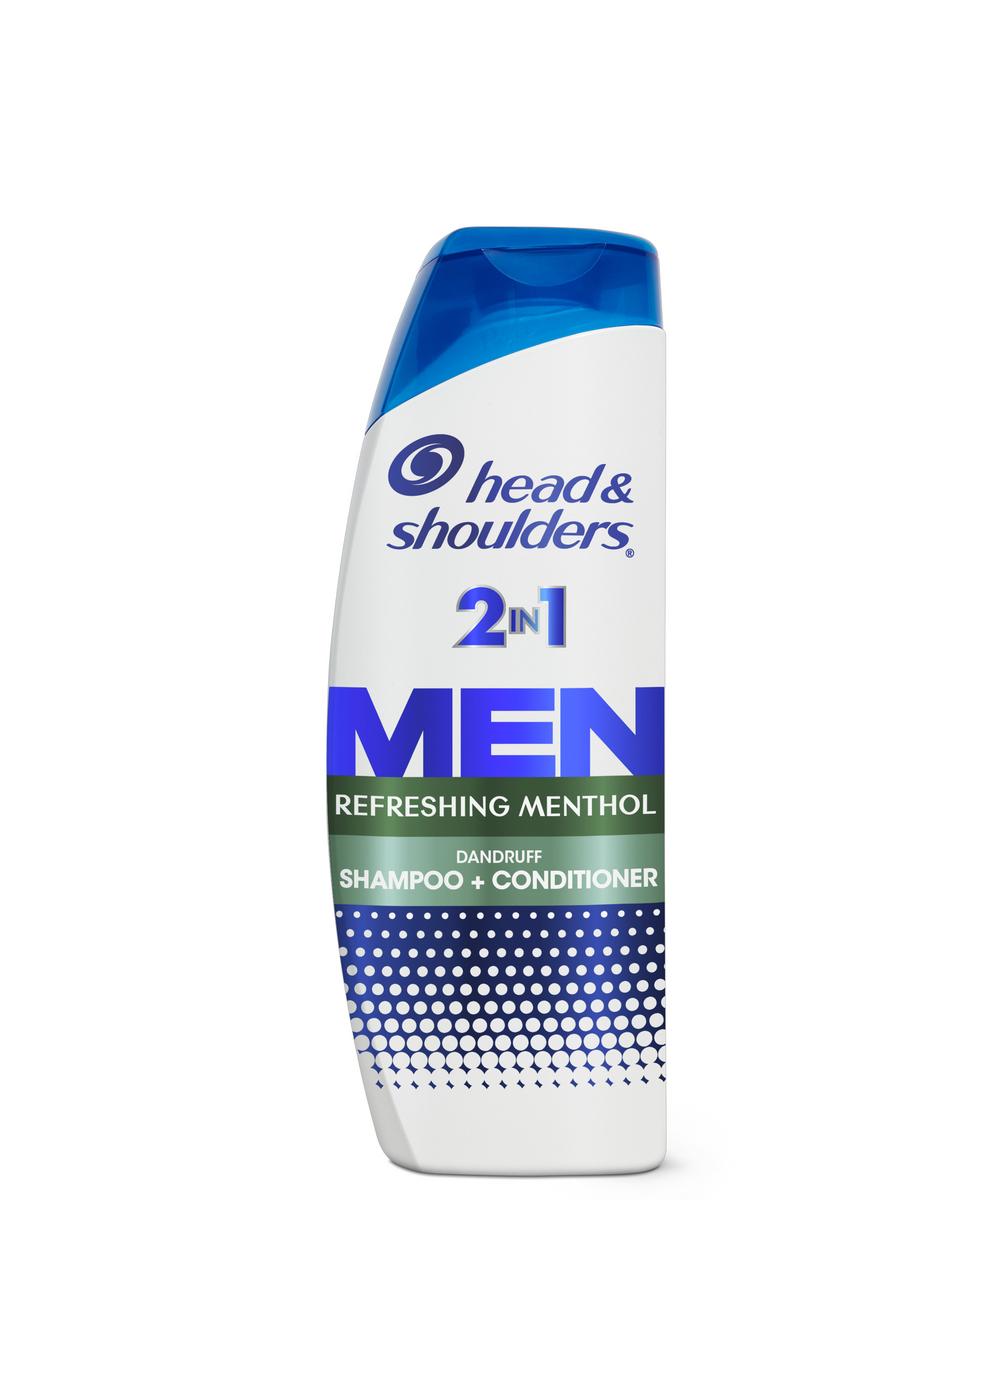 Head & Shoulders 2 in 1 Men Dandruff Shampoo + Conditioner - Refreshing Menthol; image 4 of 11